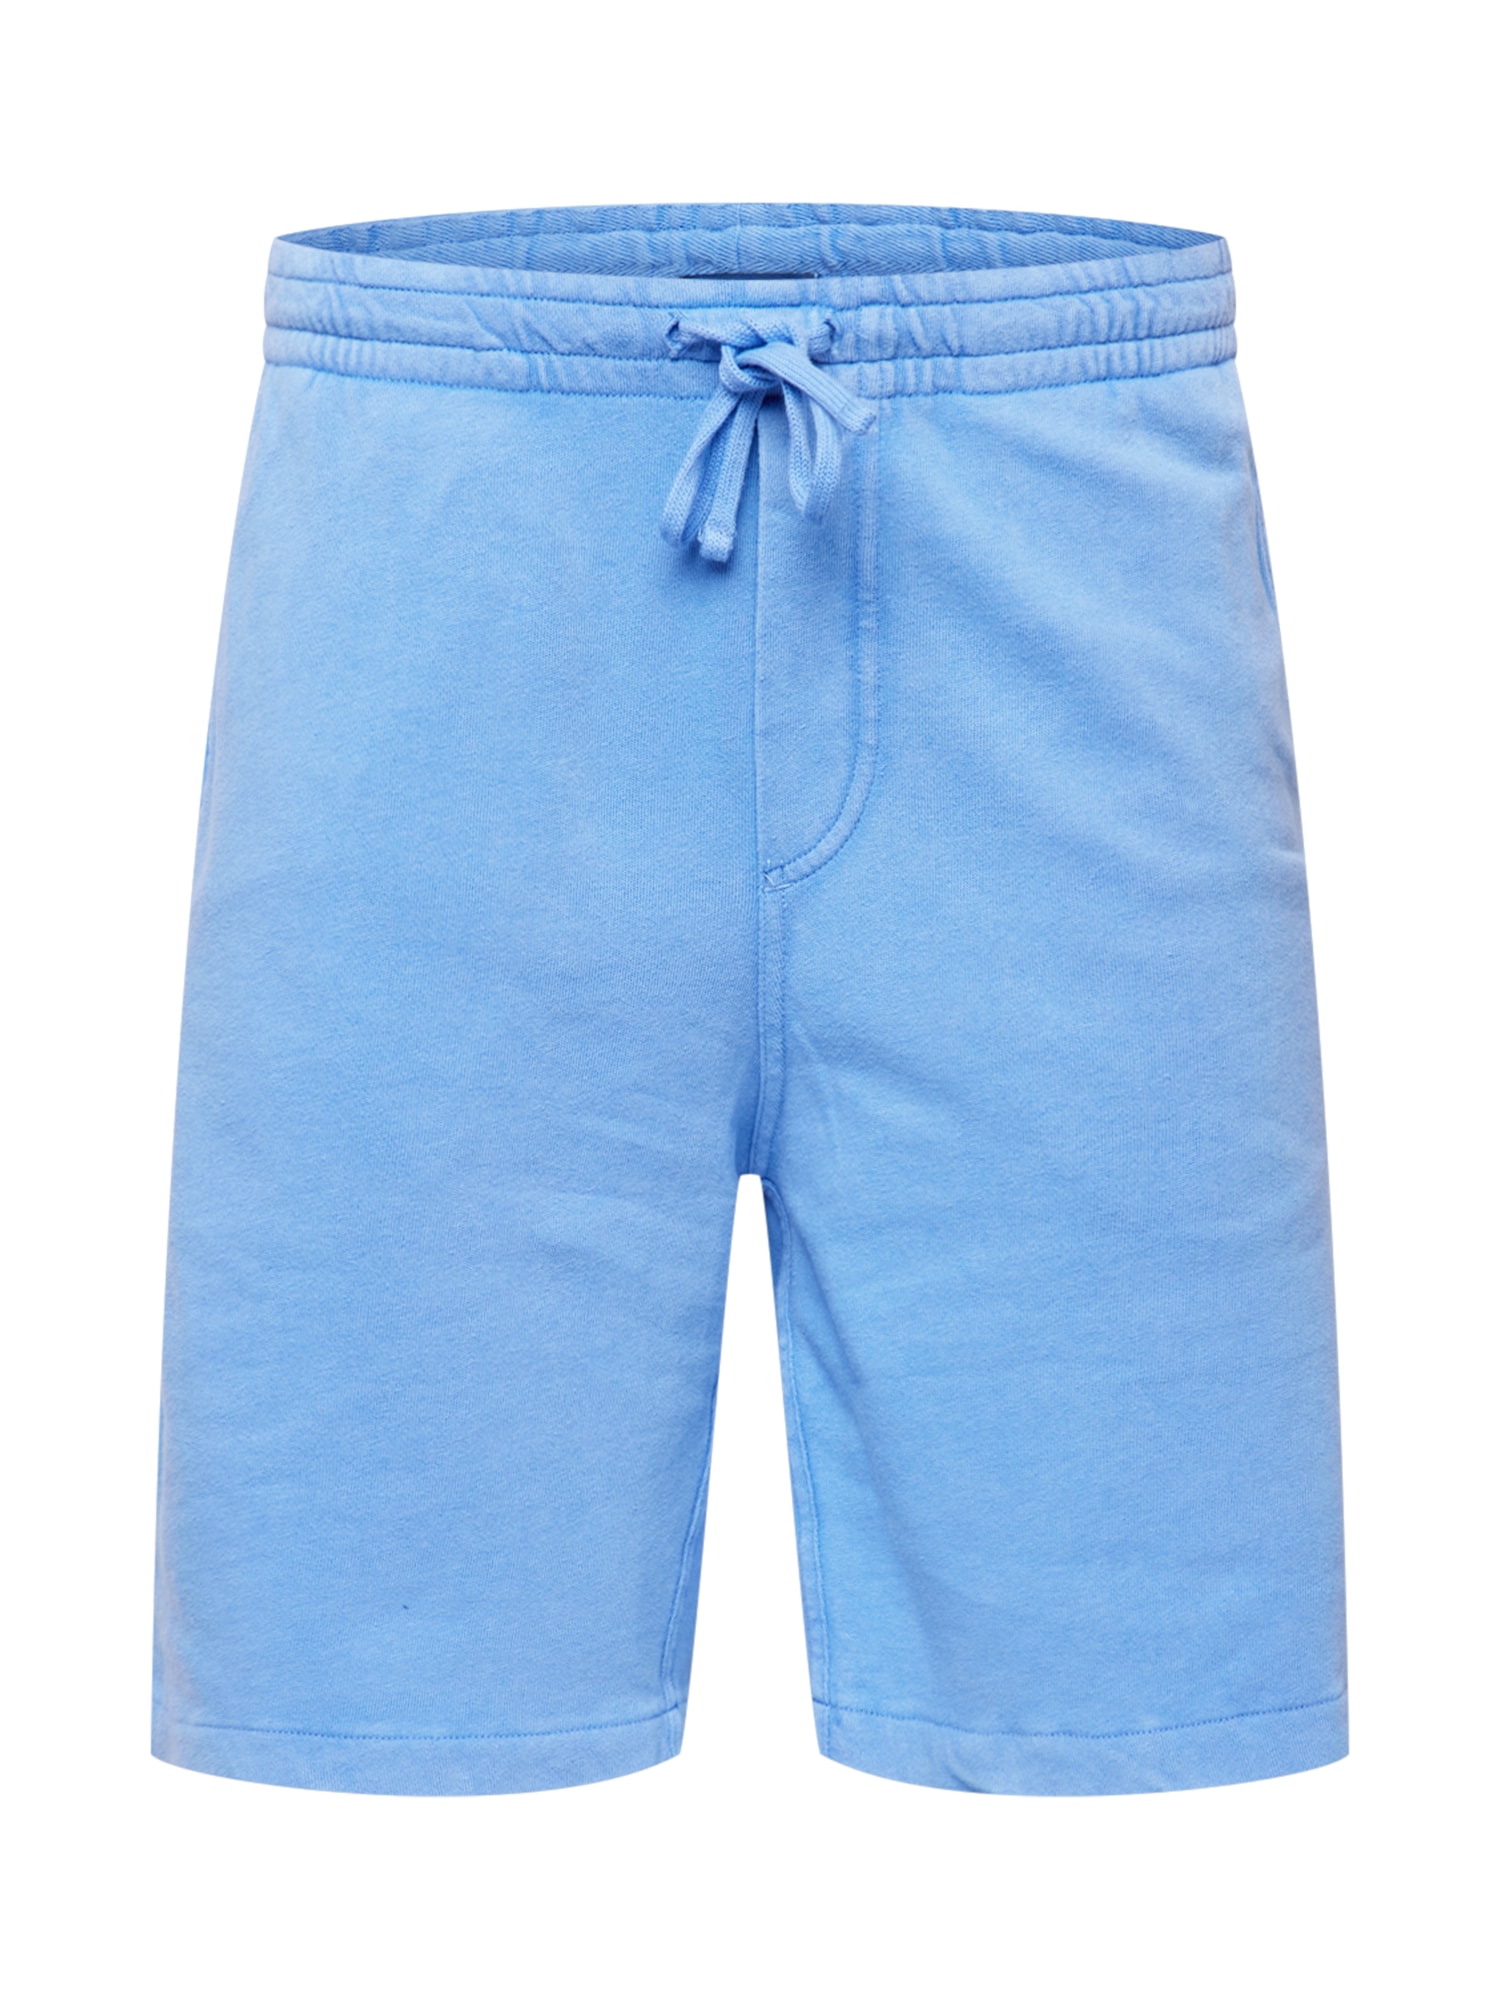 Polo Ralph Lauren Shorts himmelblau